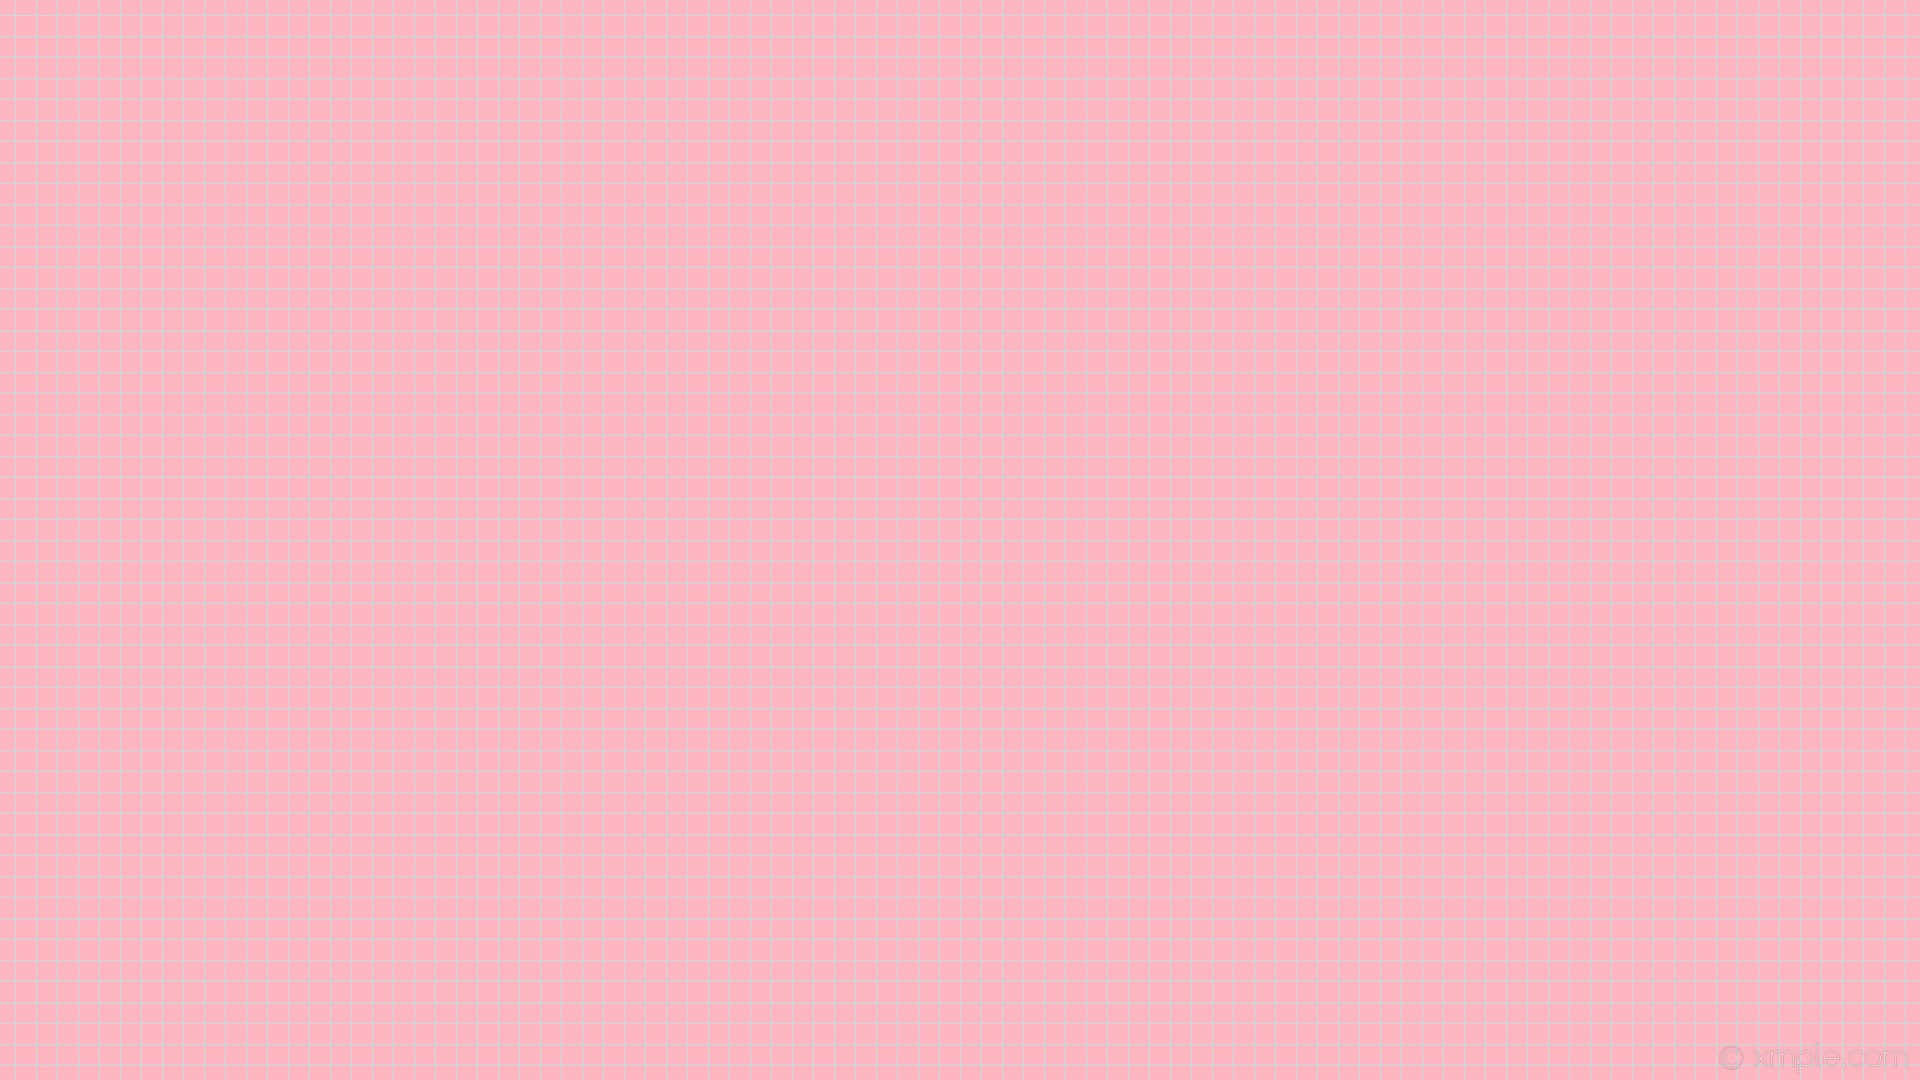 Solid Pink 1920 X 1080 Wallpaper